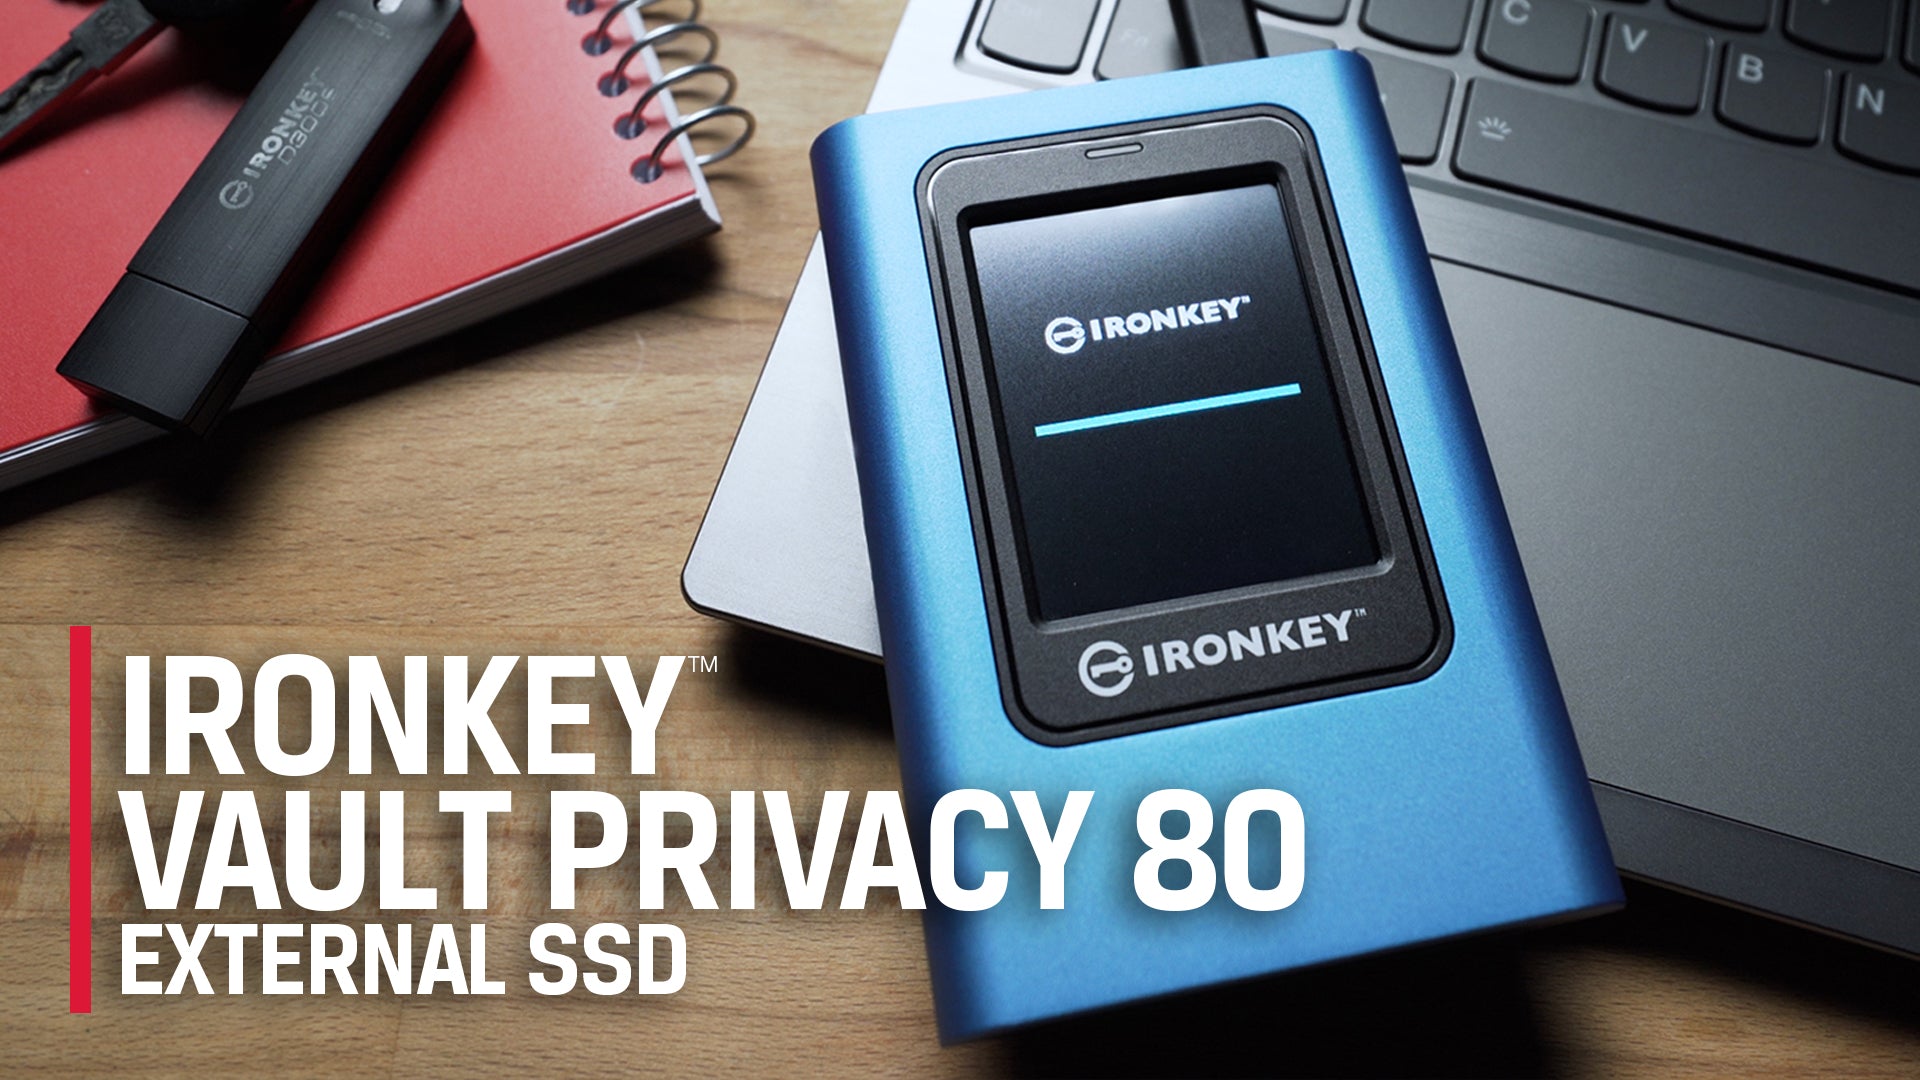 IronKey Vault Privacy 80 Encrypted External SSD